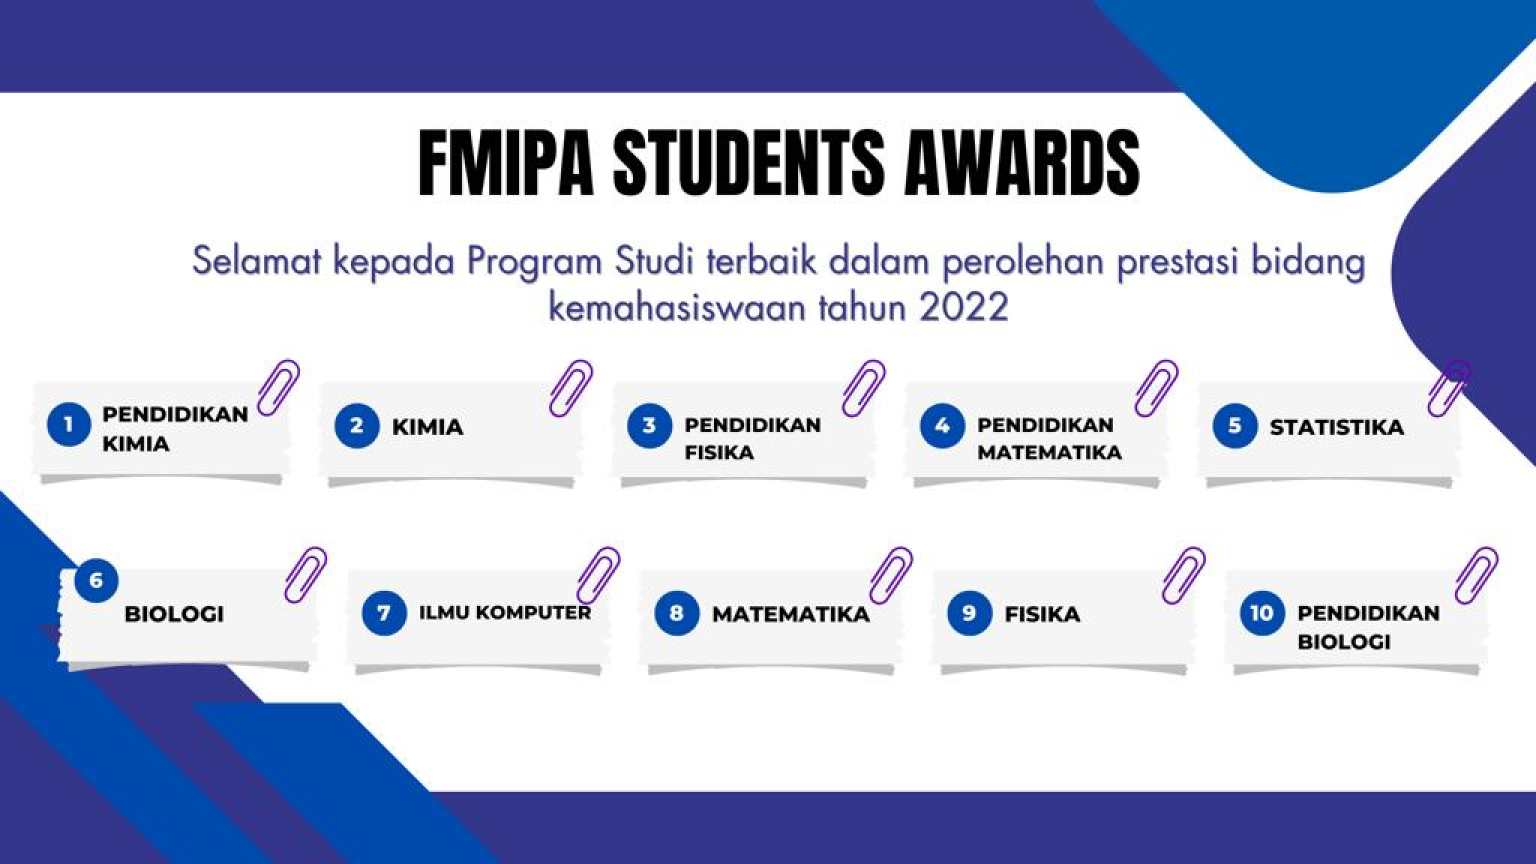 FMIPA STUDENTS AWARDS